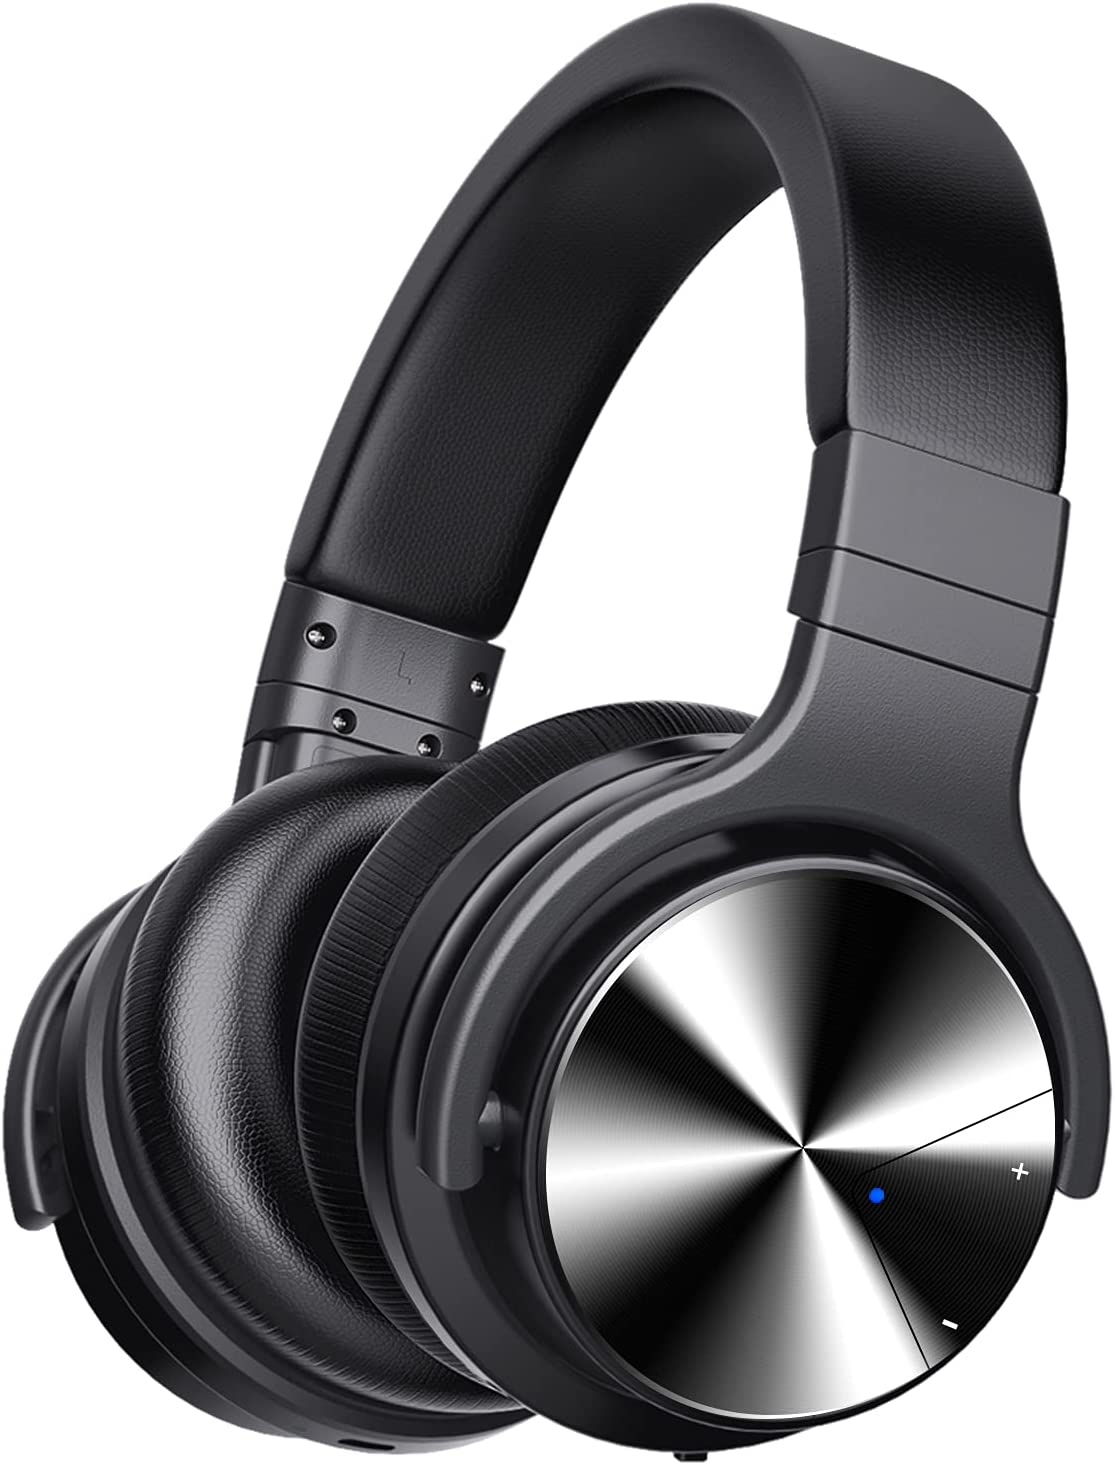 Qisebin E7 PRO Active Noise Cancelling Headphones – Just $55.97 at Amazon